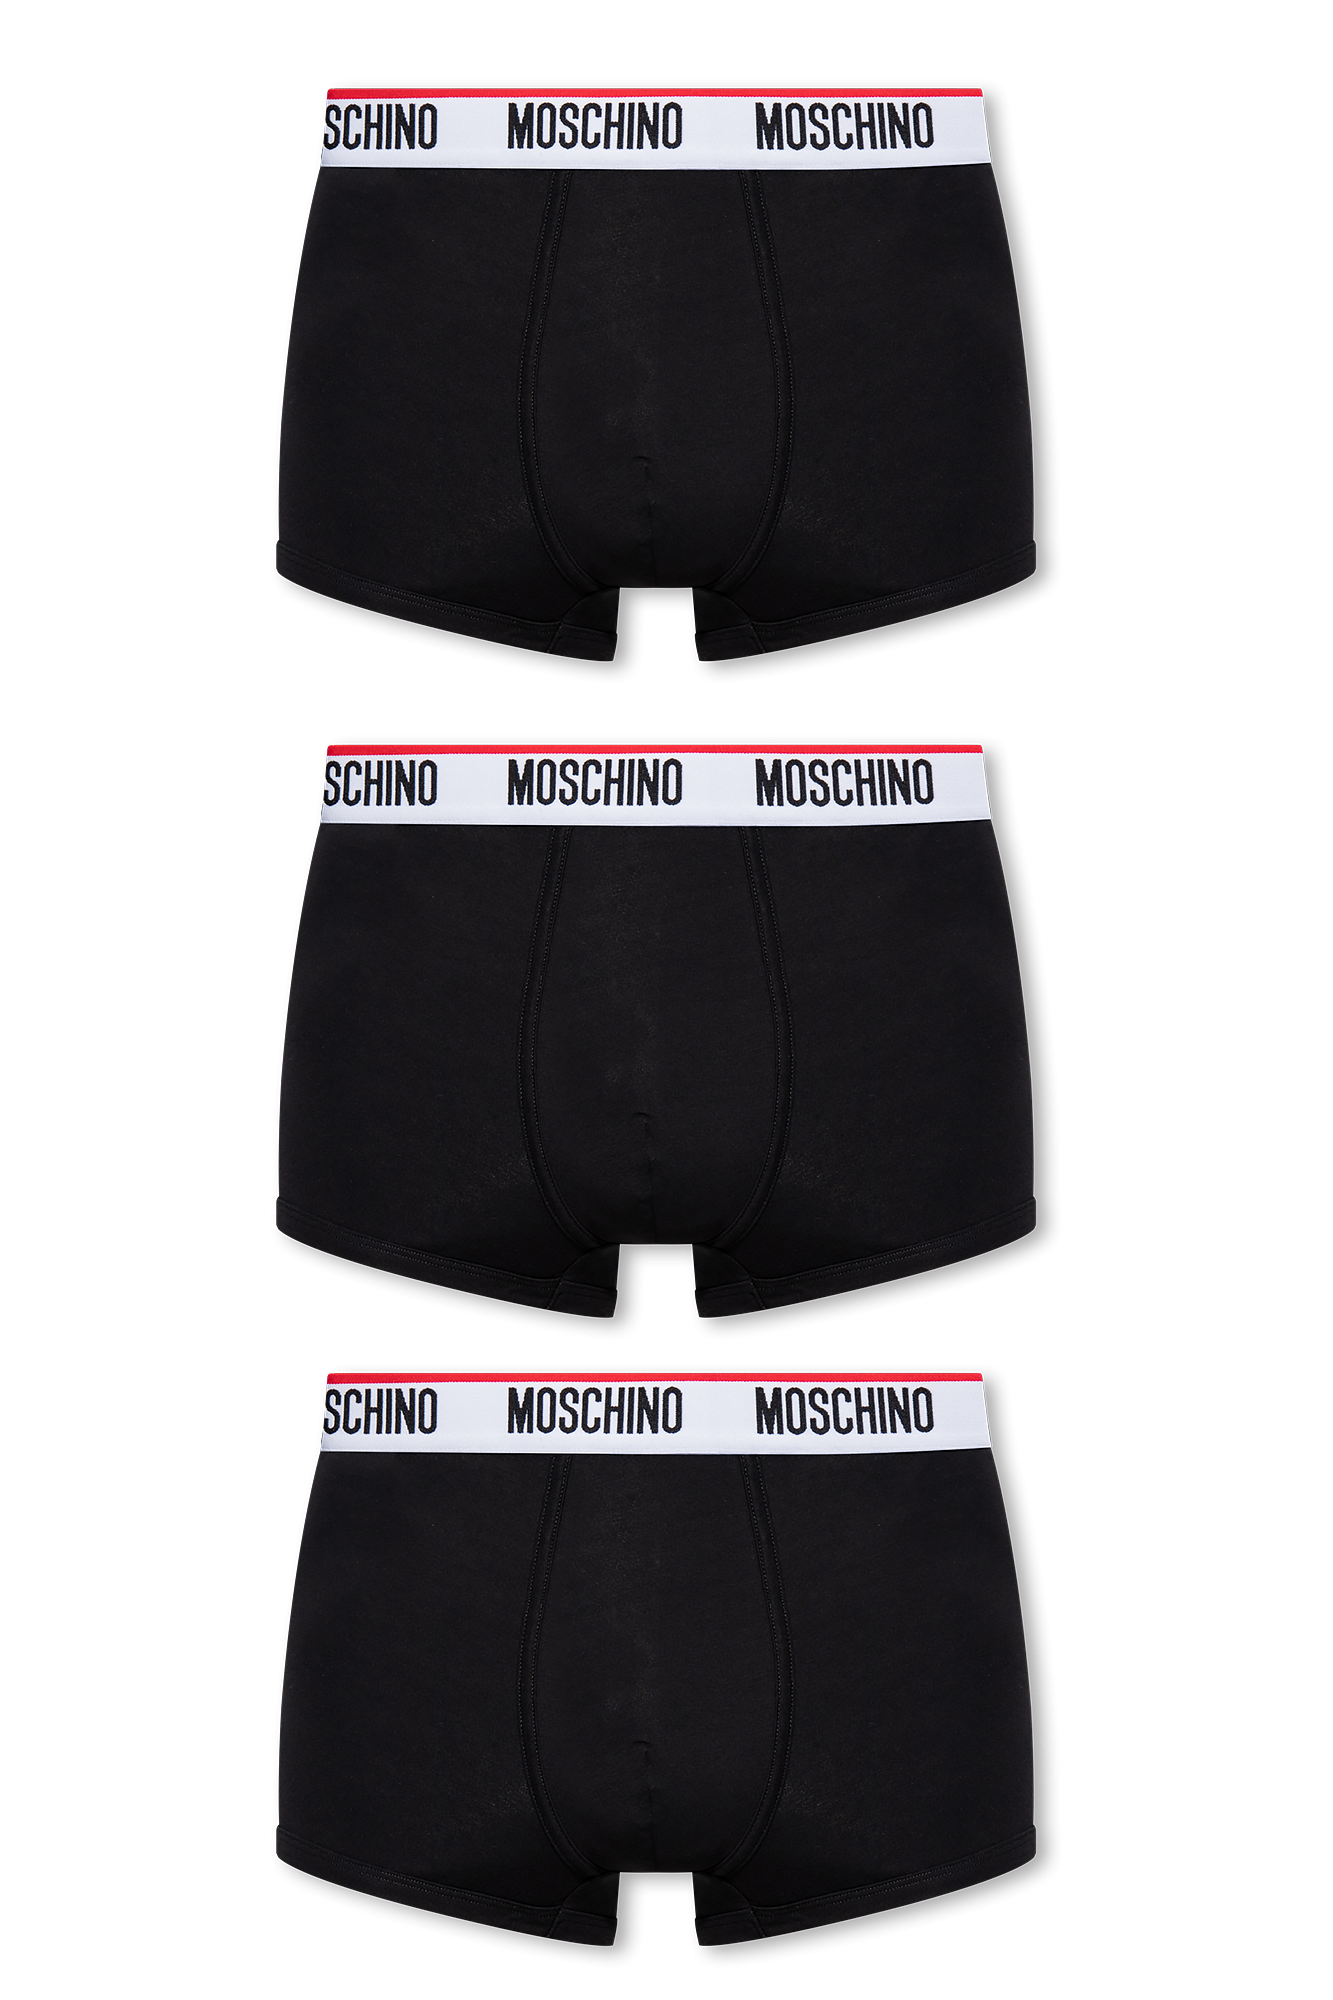 Moschino Men's Basic Tripack Boxer Briefs